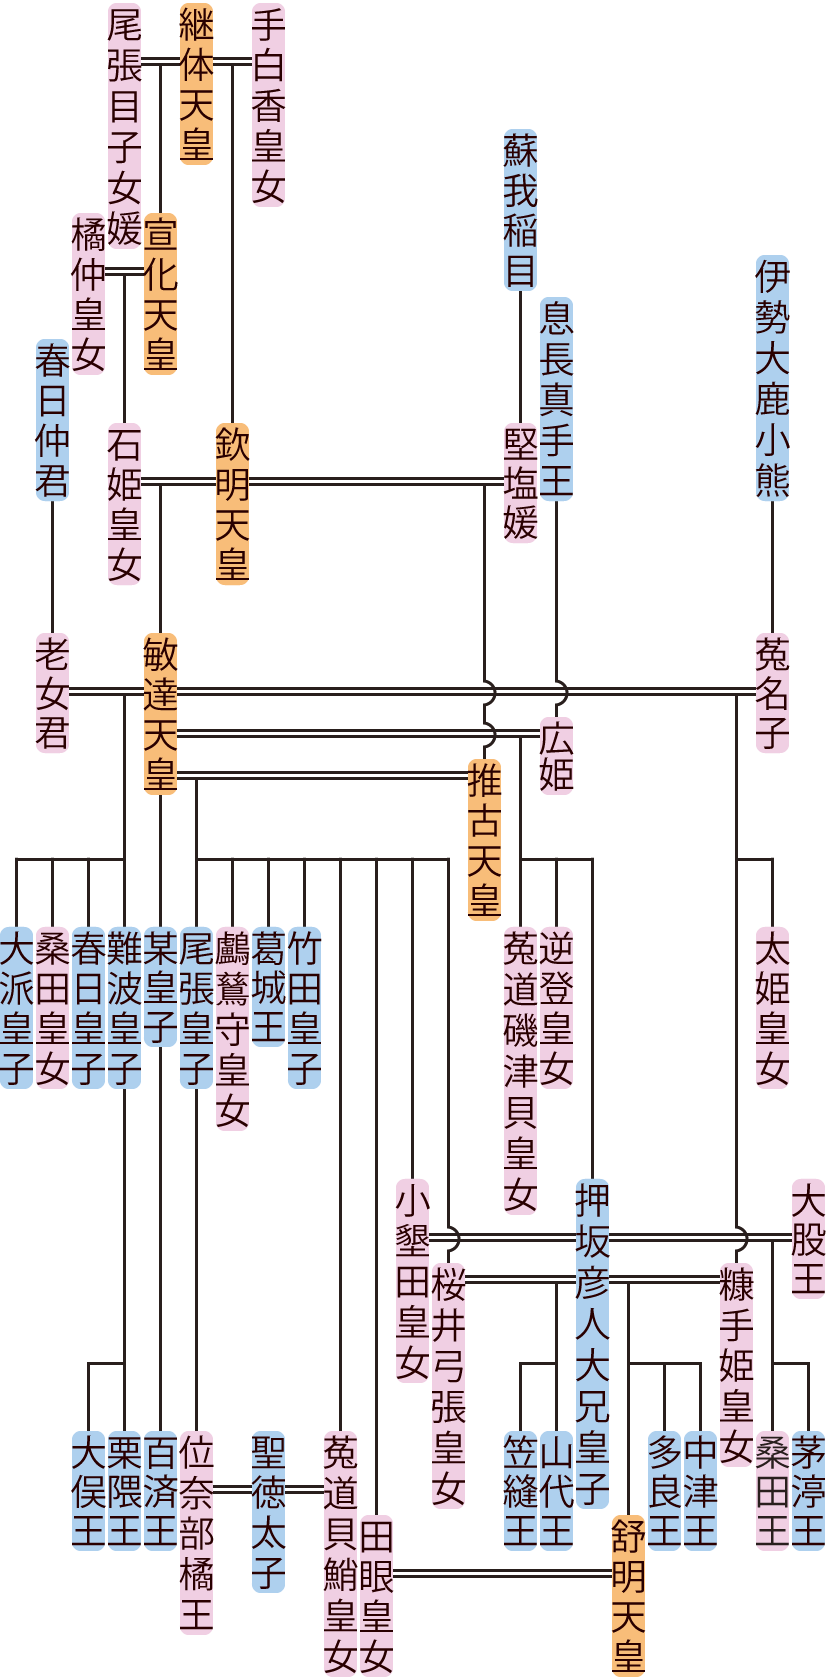 敏達天皇・推古天皇の系図